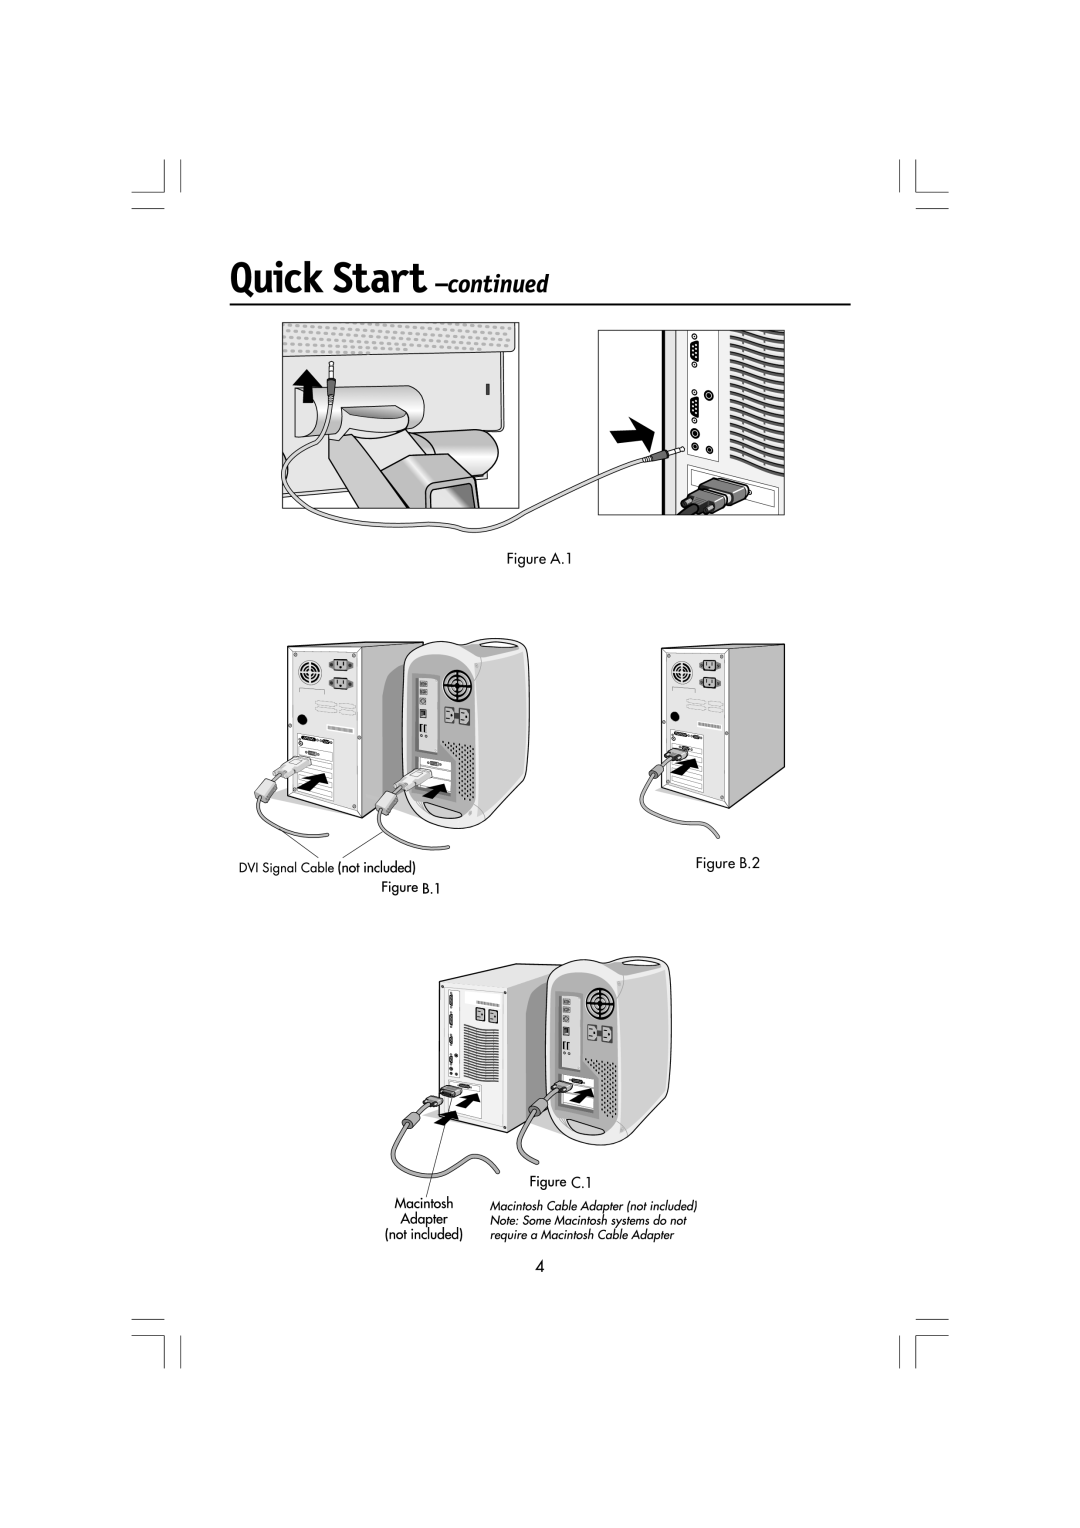 Mitsubishi Electronics LCD1560M manual Quick Start -continued, Figure A.1 Figure B.2 C.1 